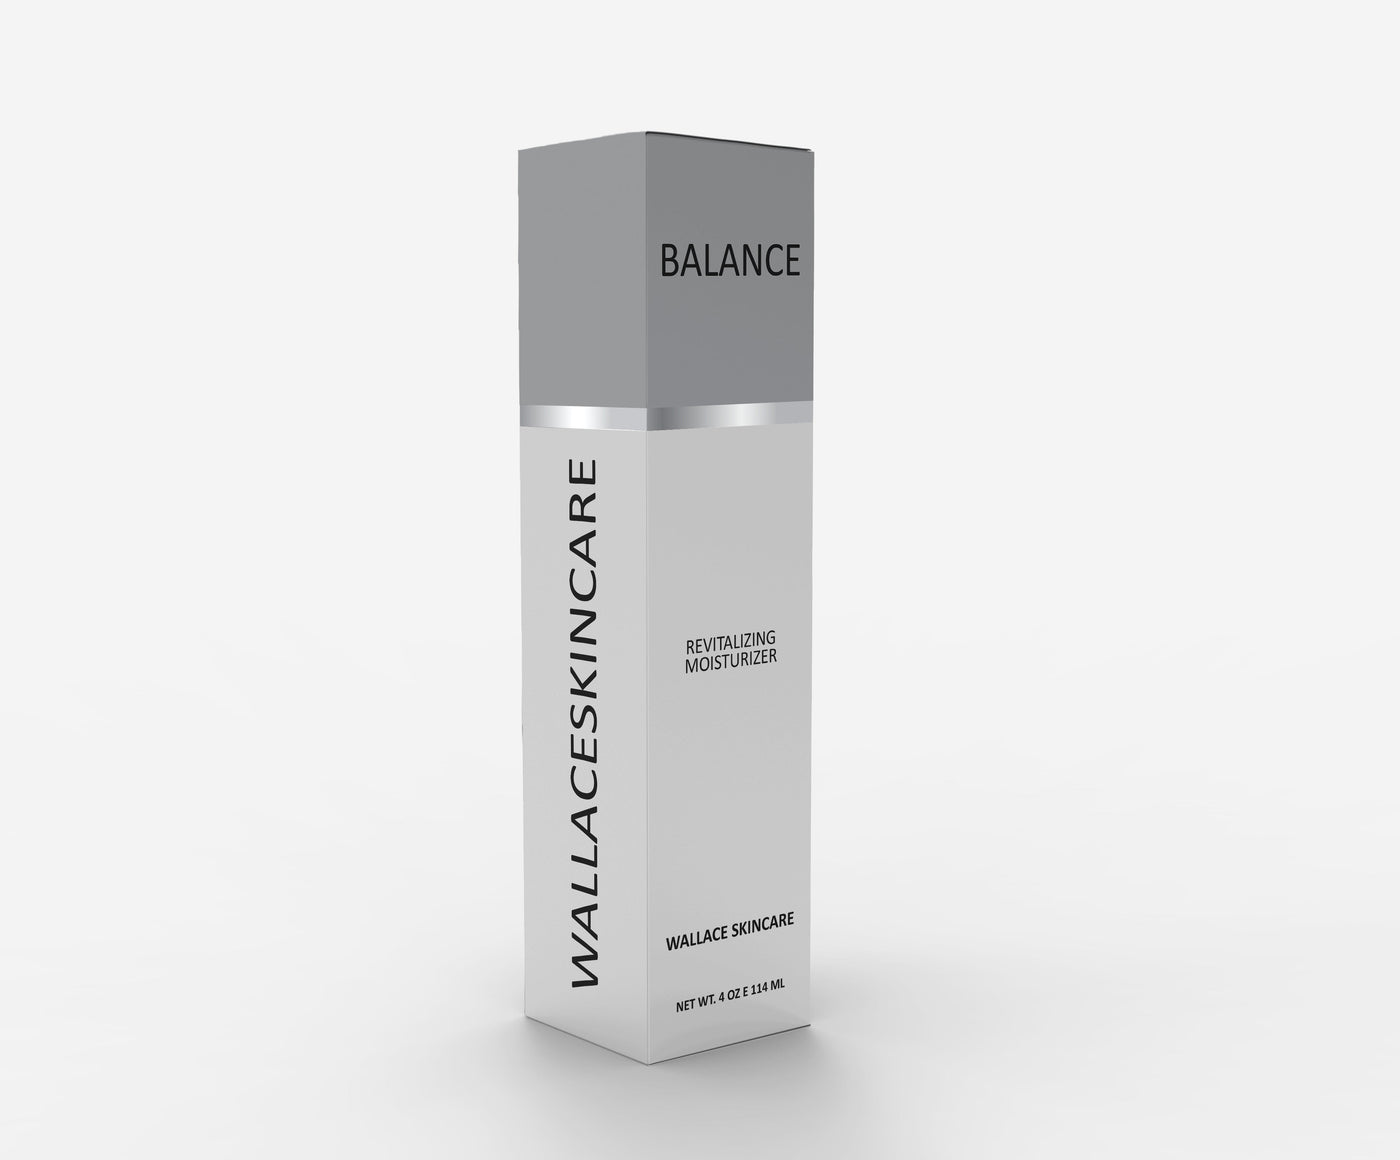 Balance Moisturizer by Wallace Skincare